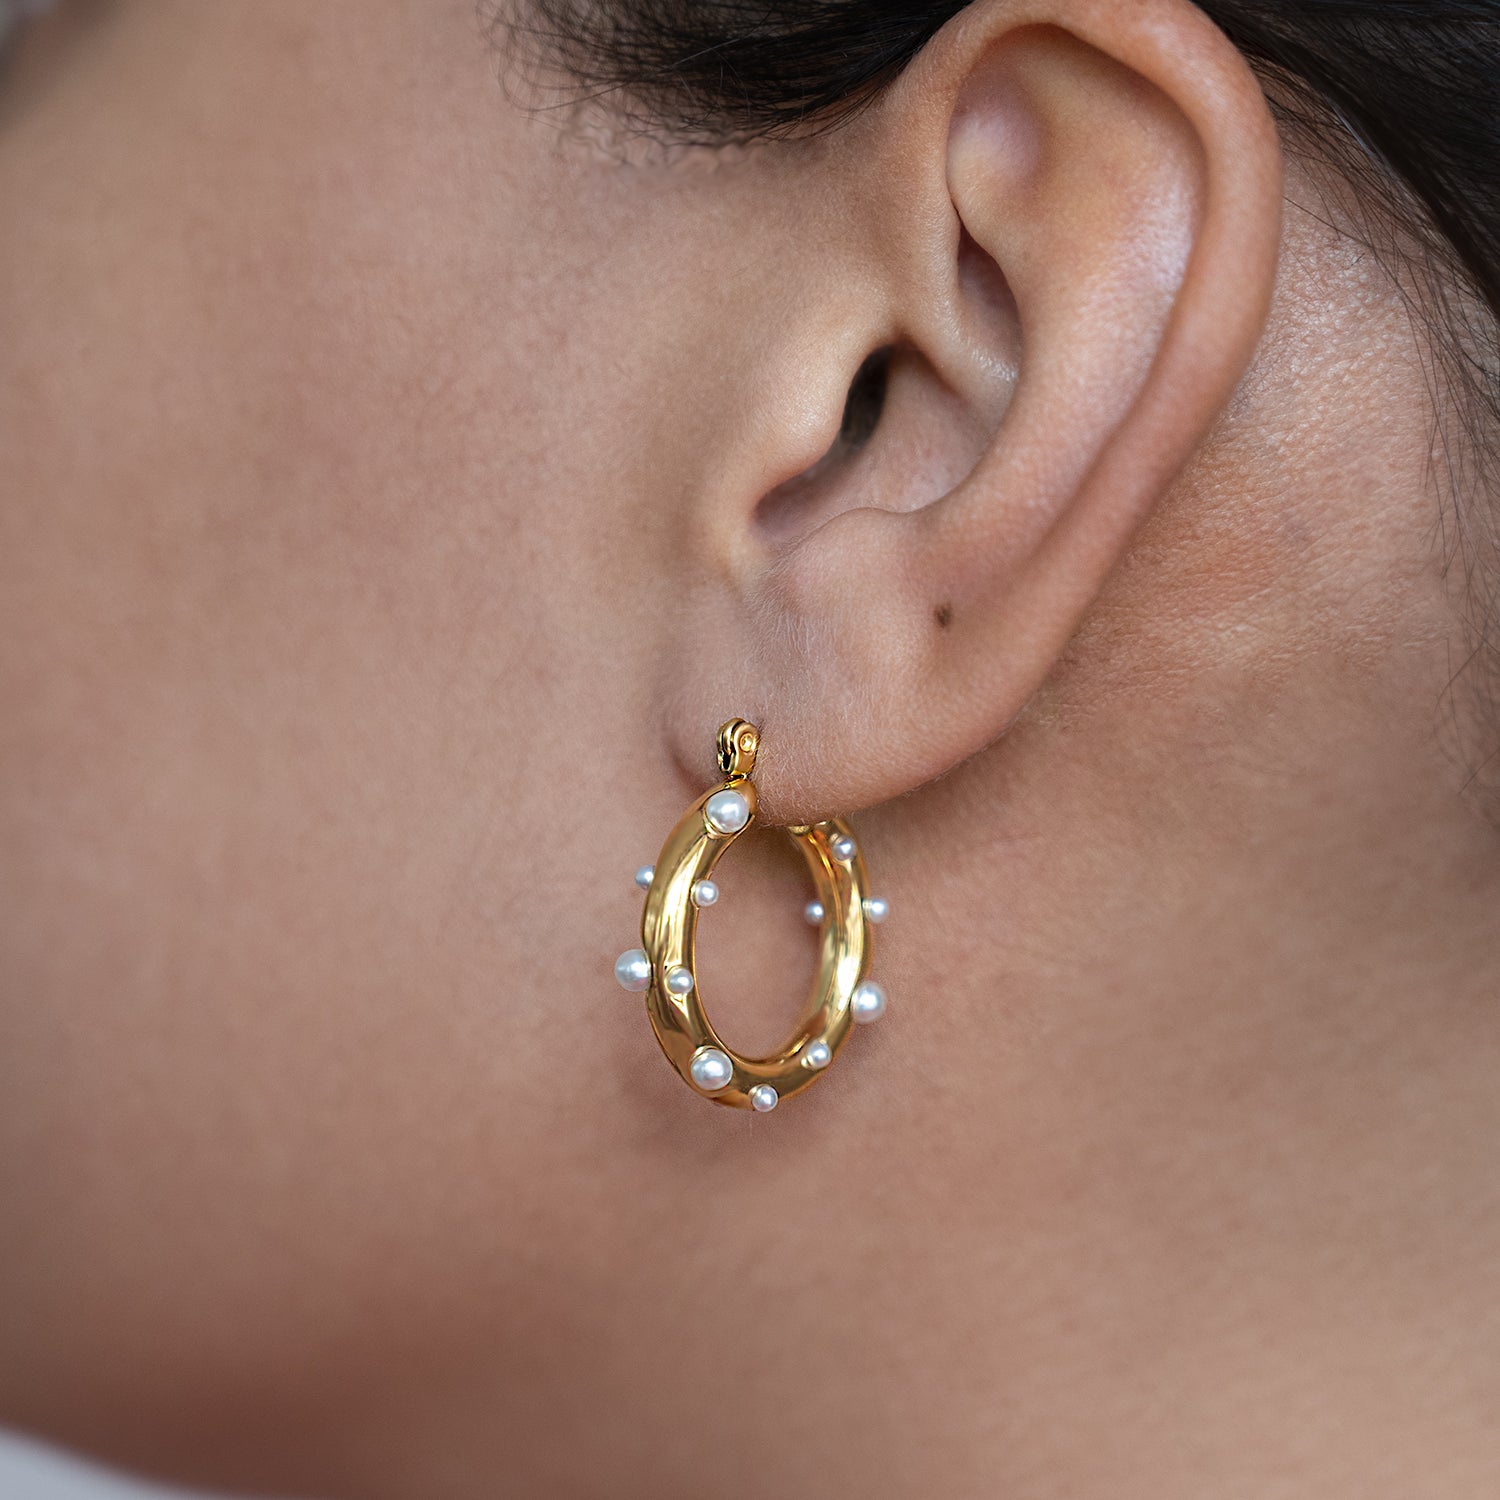 Dotted Pearl Hoop Earrings Non Tarnish shown worn in a model's ear